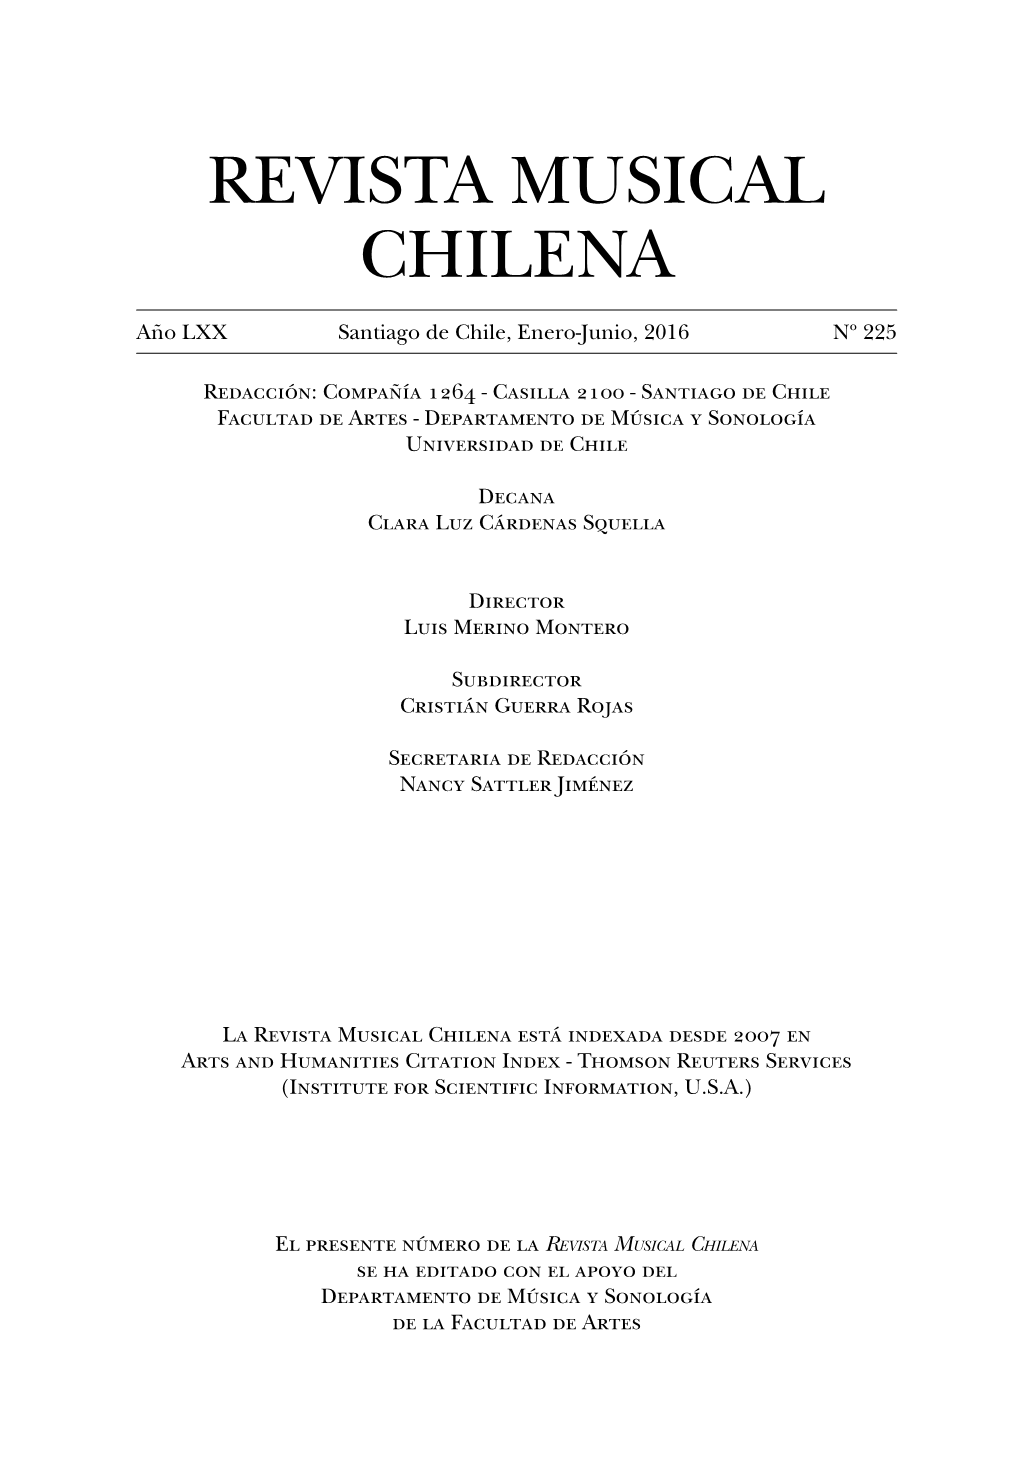 Revista Musical Chilena